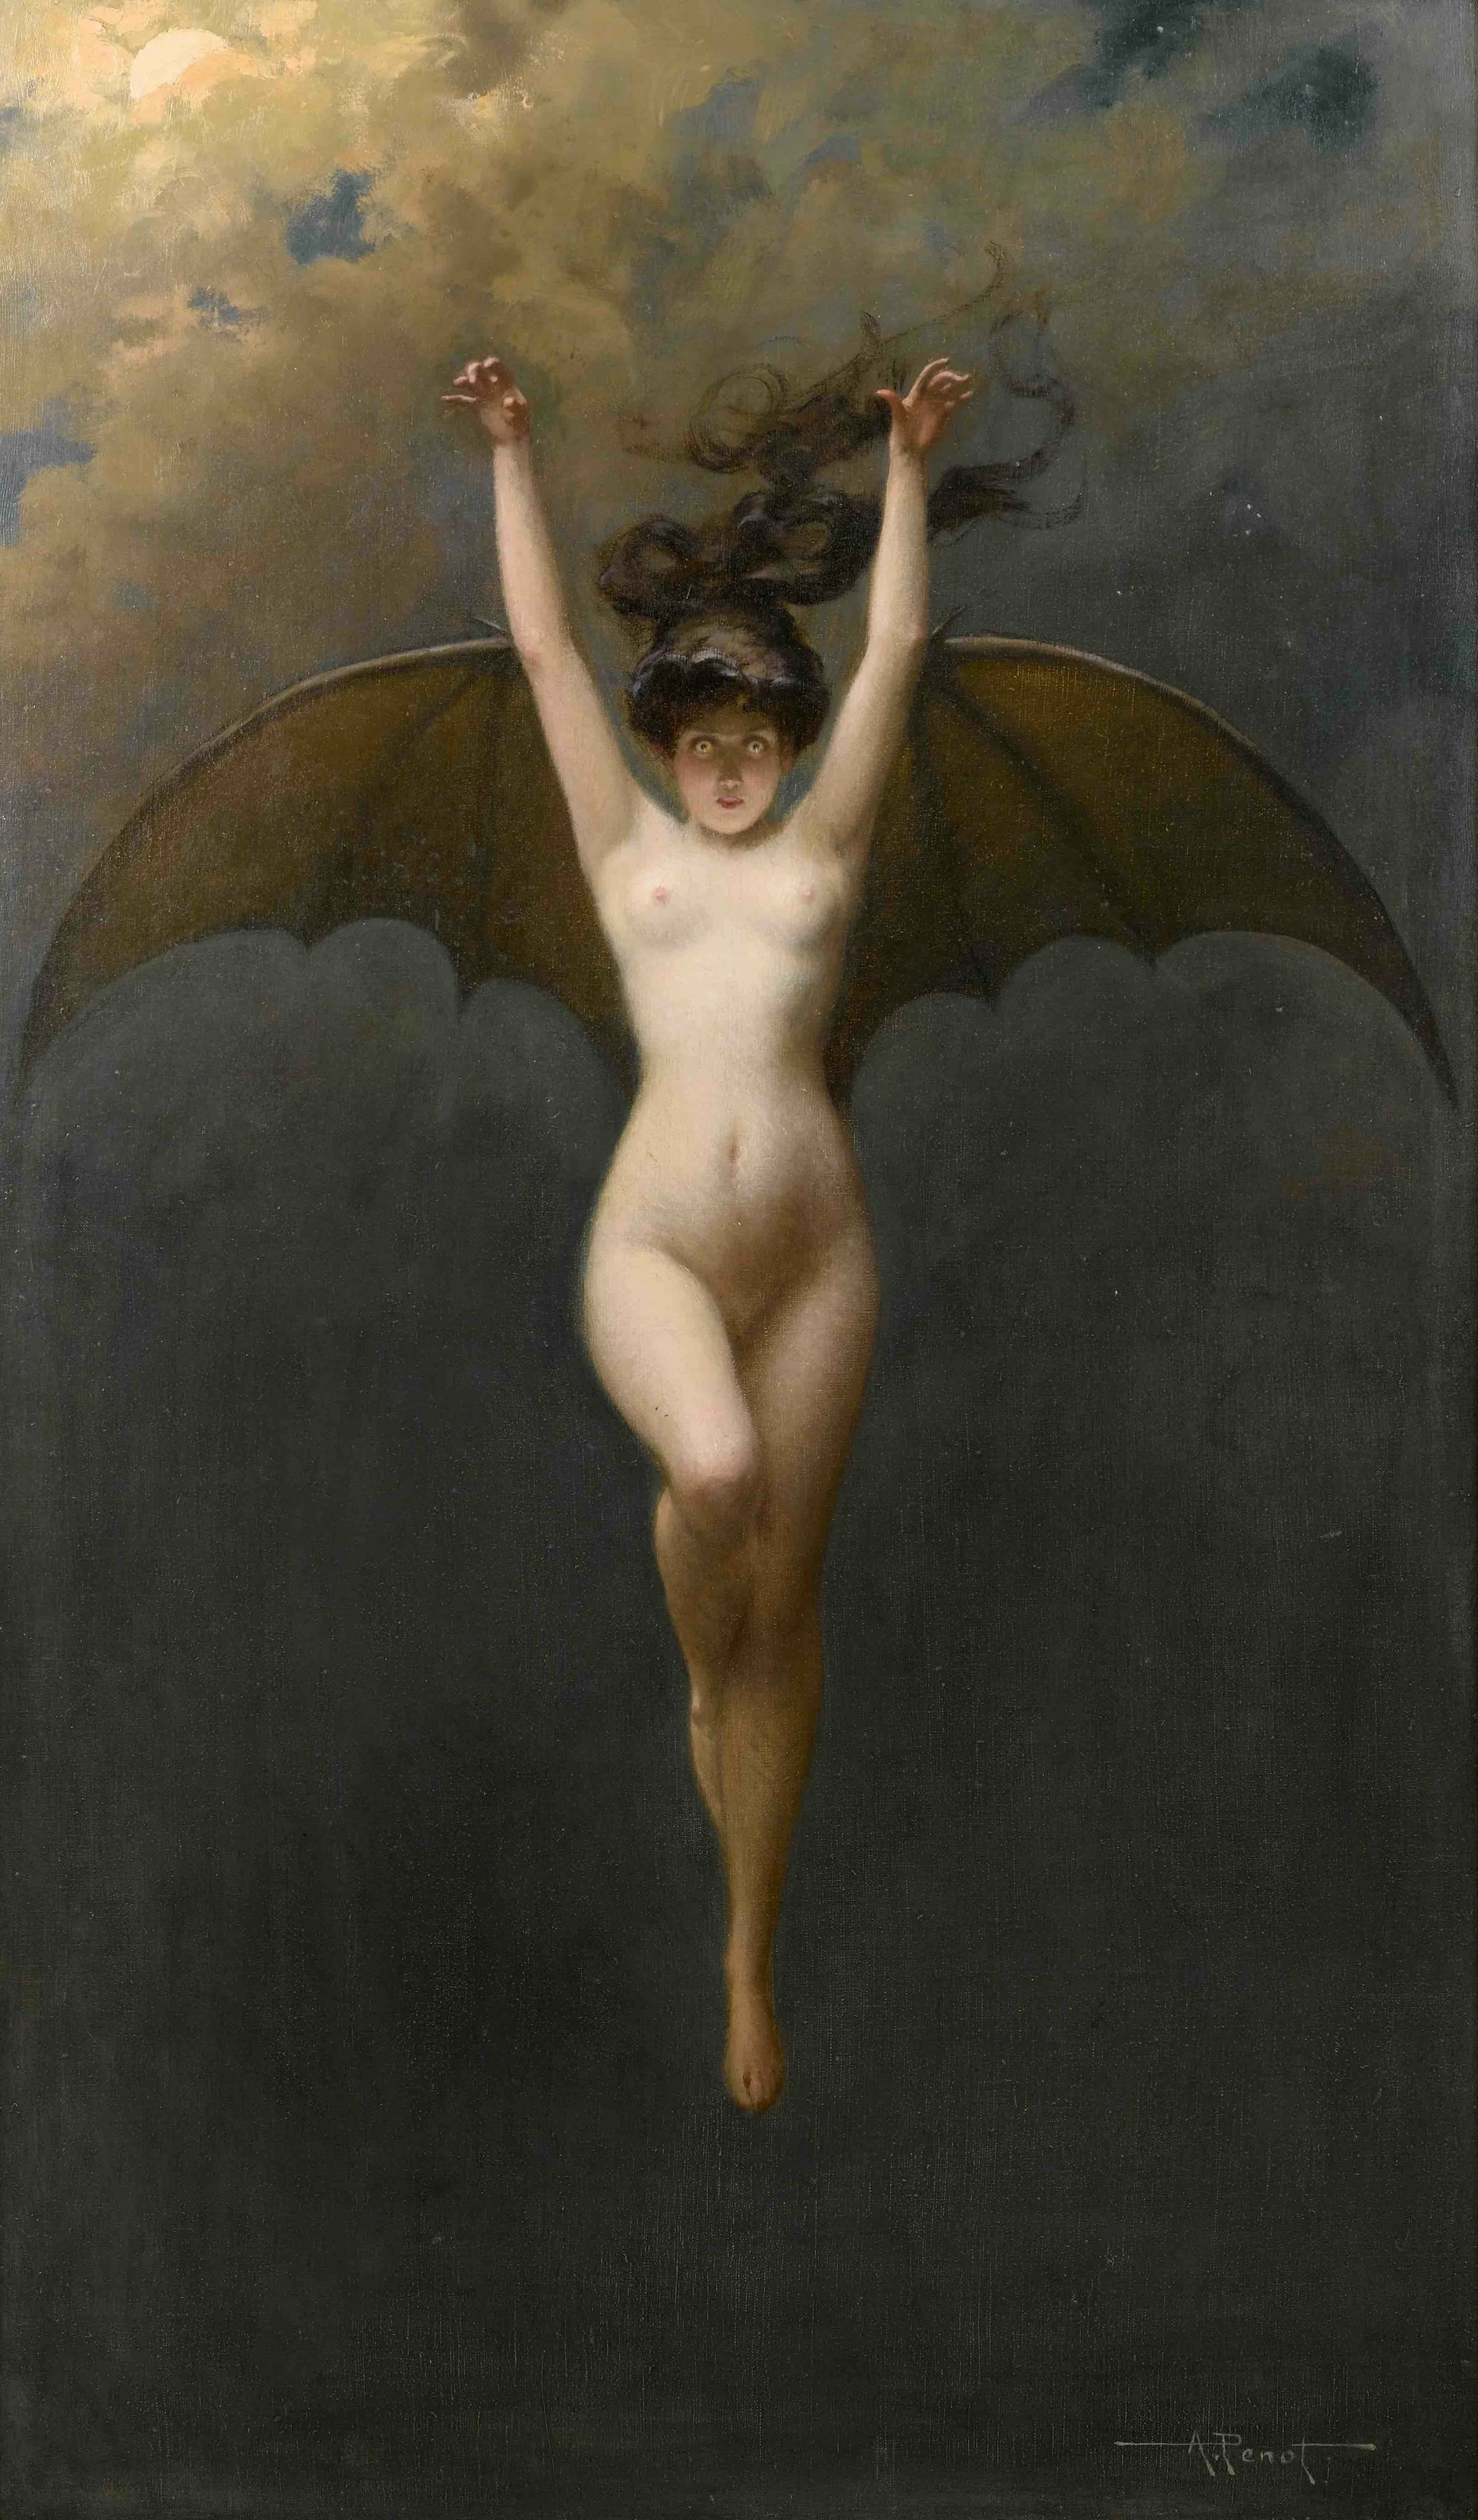 The Bat Woman, Albert Joseph Pénot